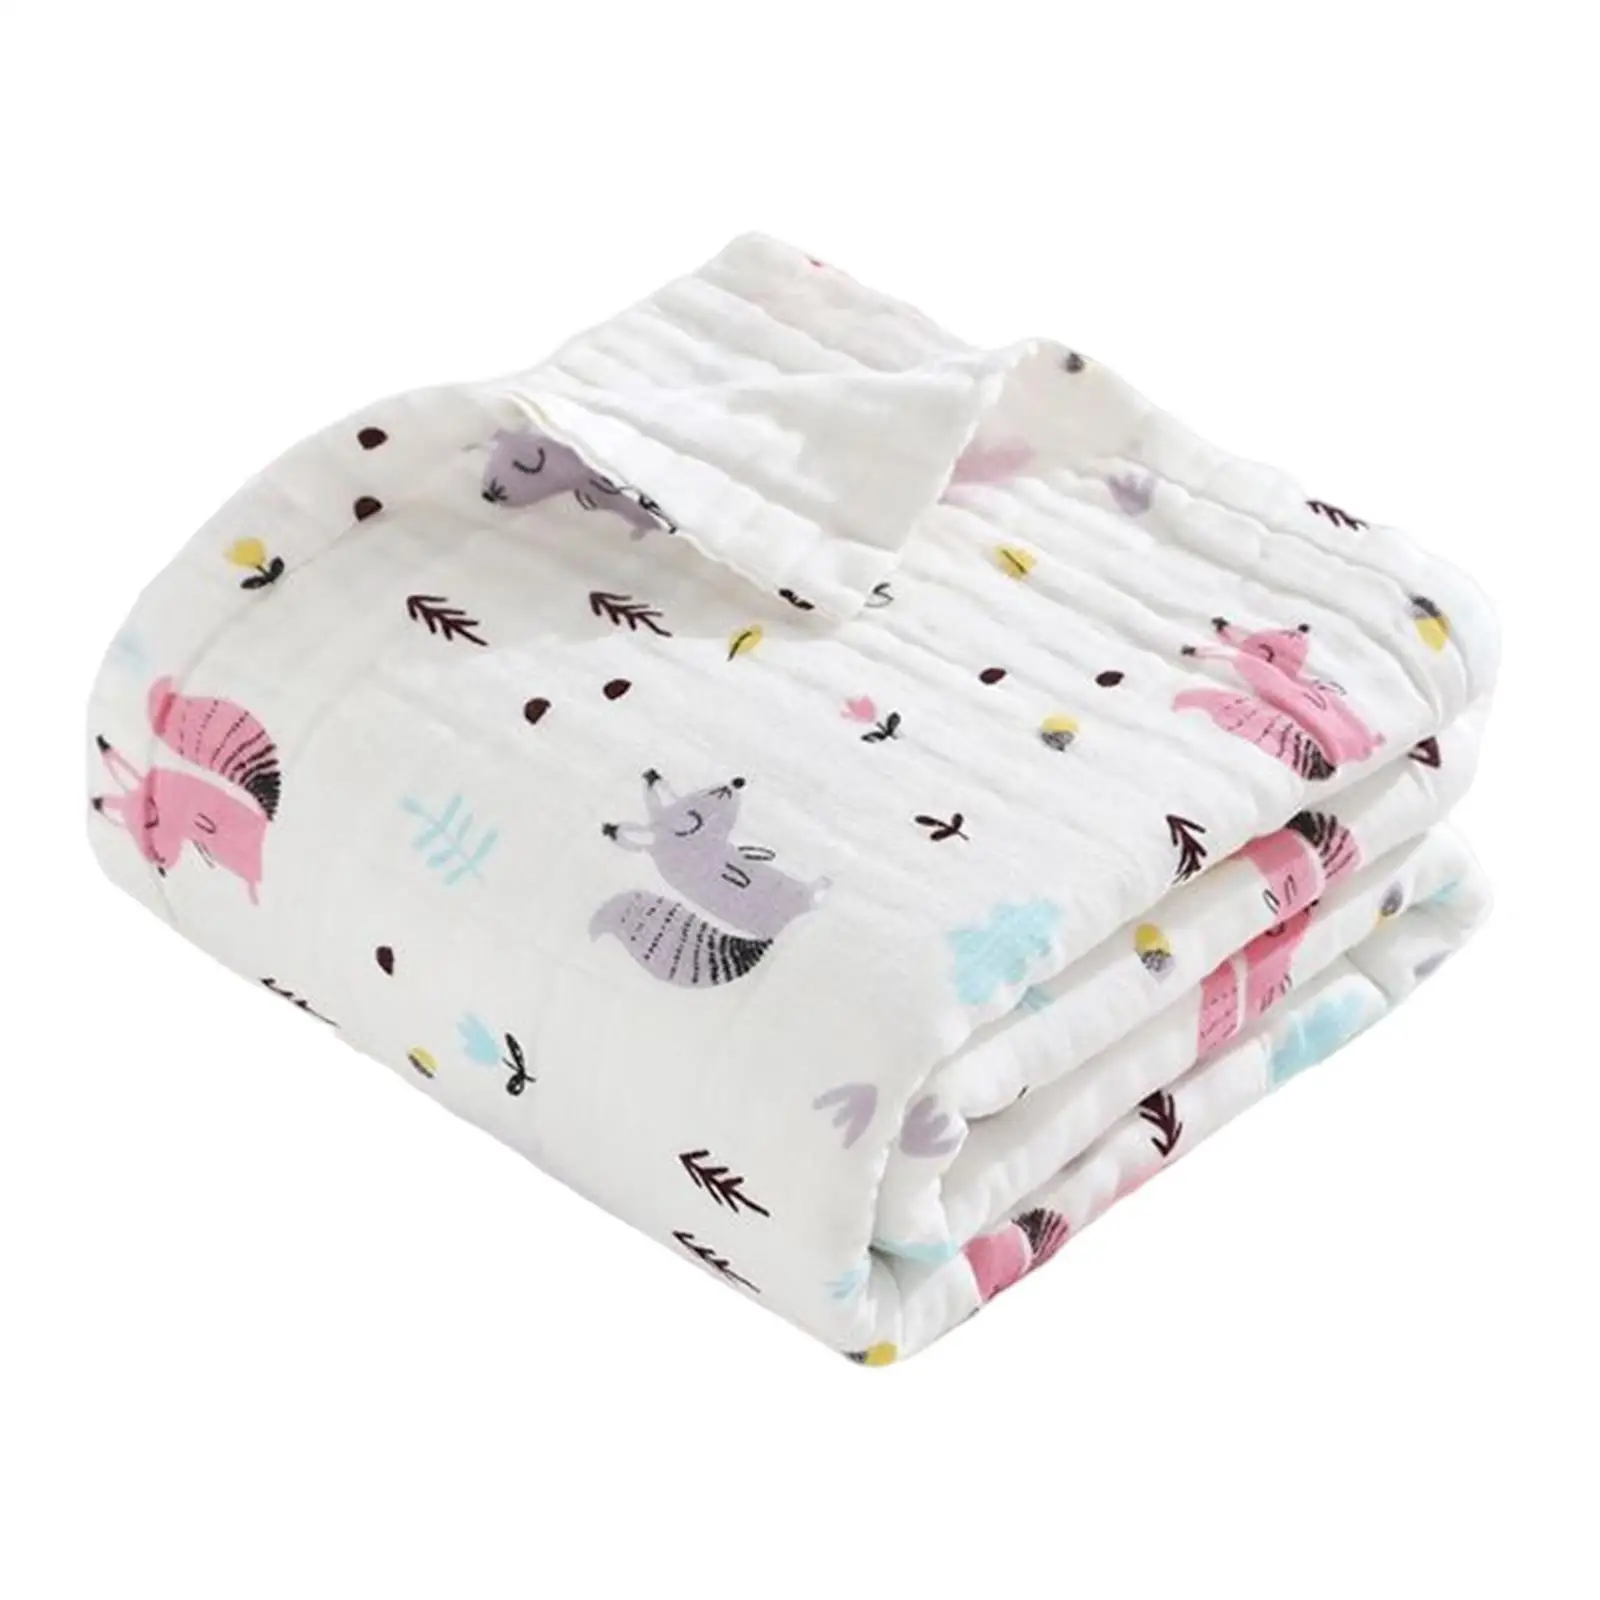 110x110cm bath Towel Gauze cotton Newborn Comfortable Square Infant Bath Sheet Swaddling Child Boys Girls Kids Blanket